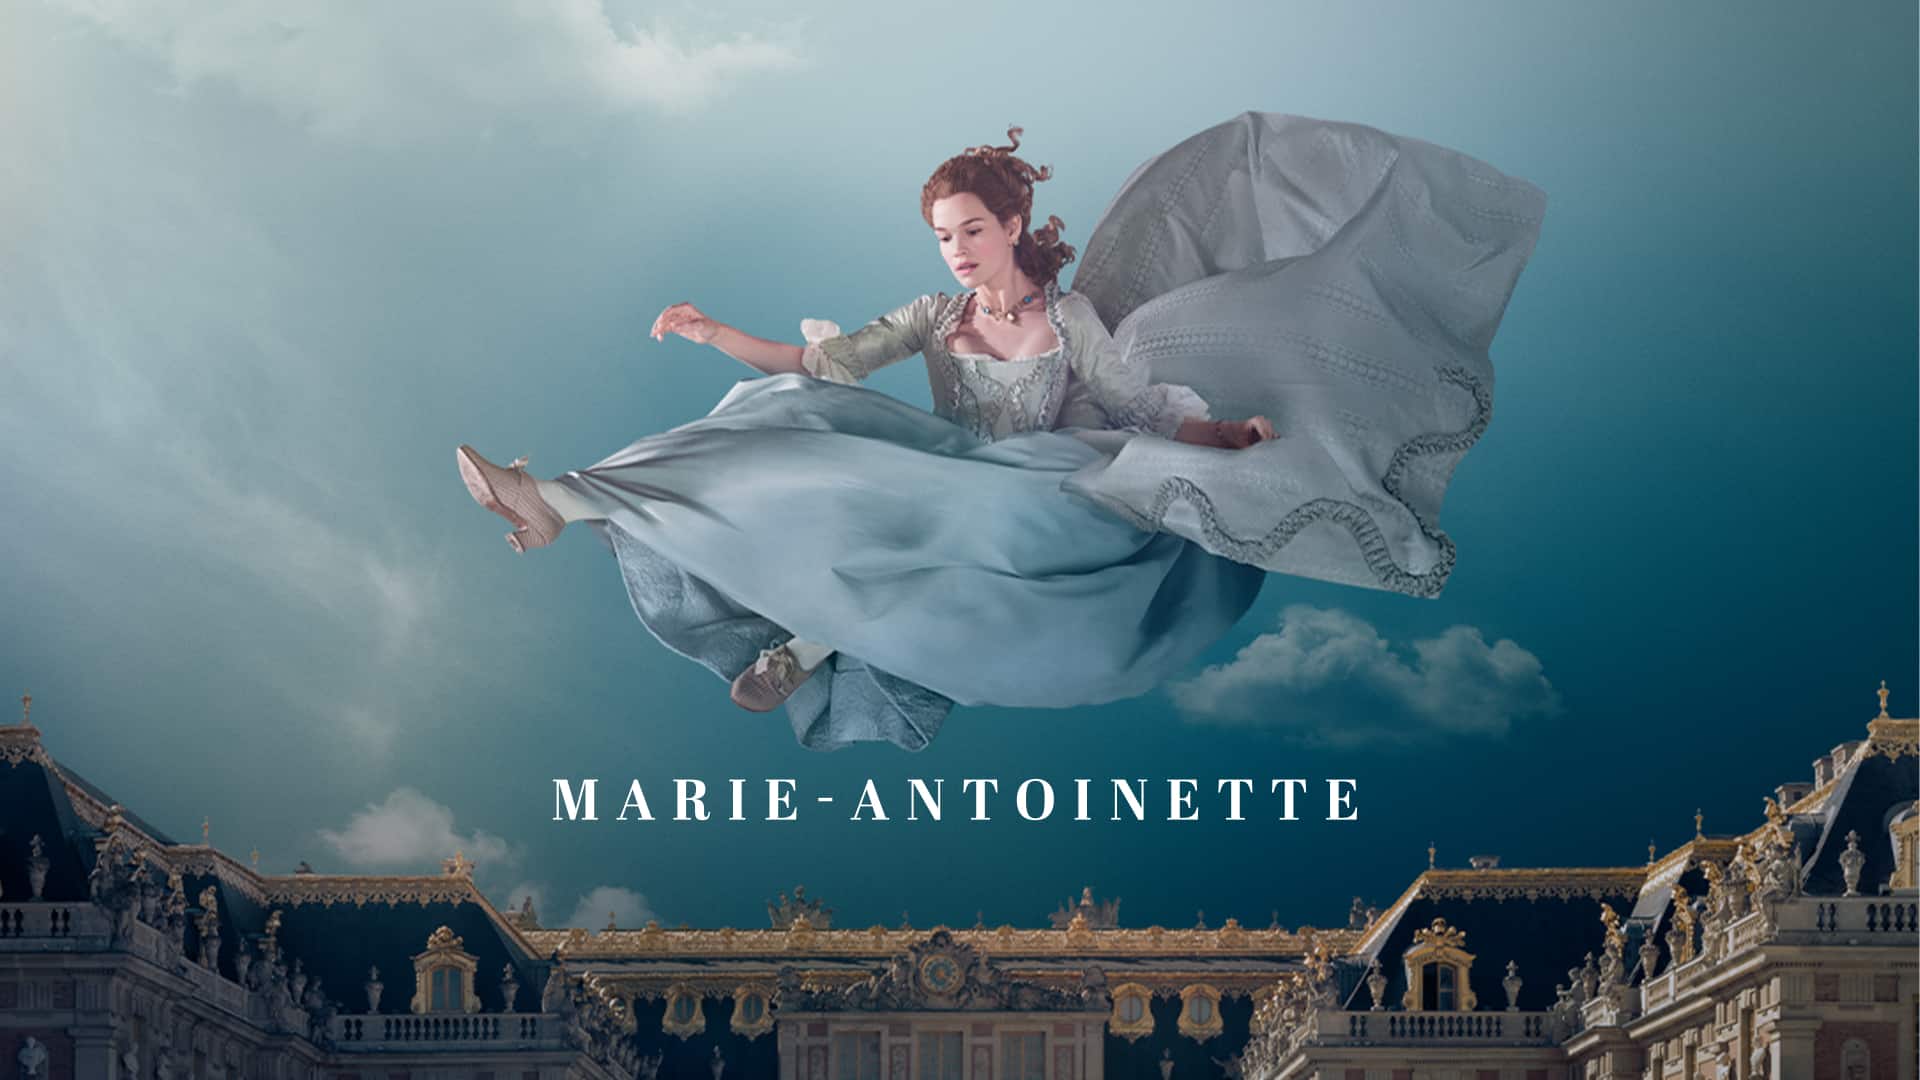 Marie Antoinette | Brand New Trailer ud83dudd25 - BBC